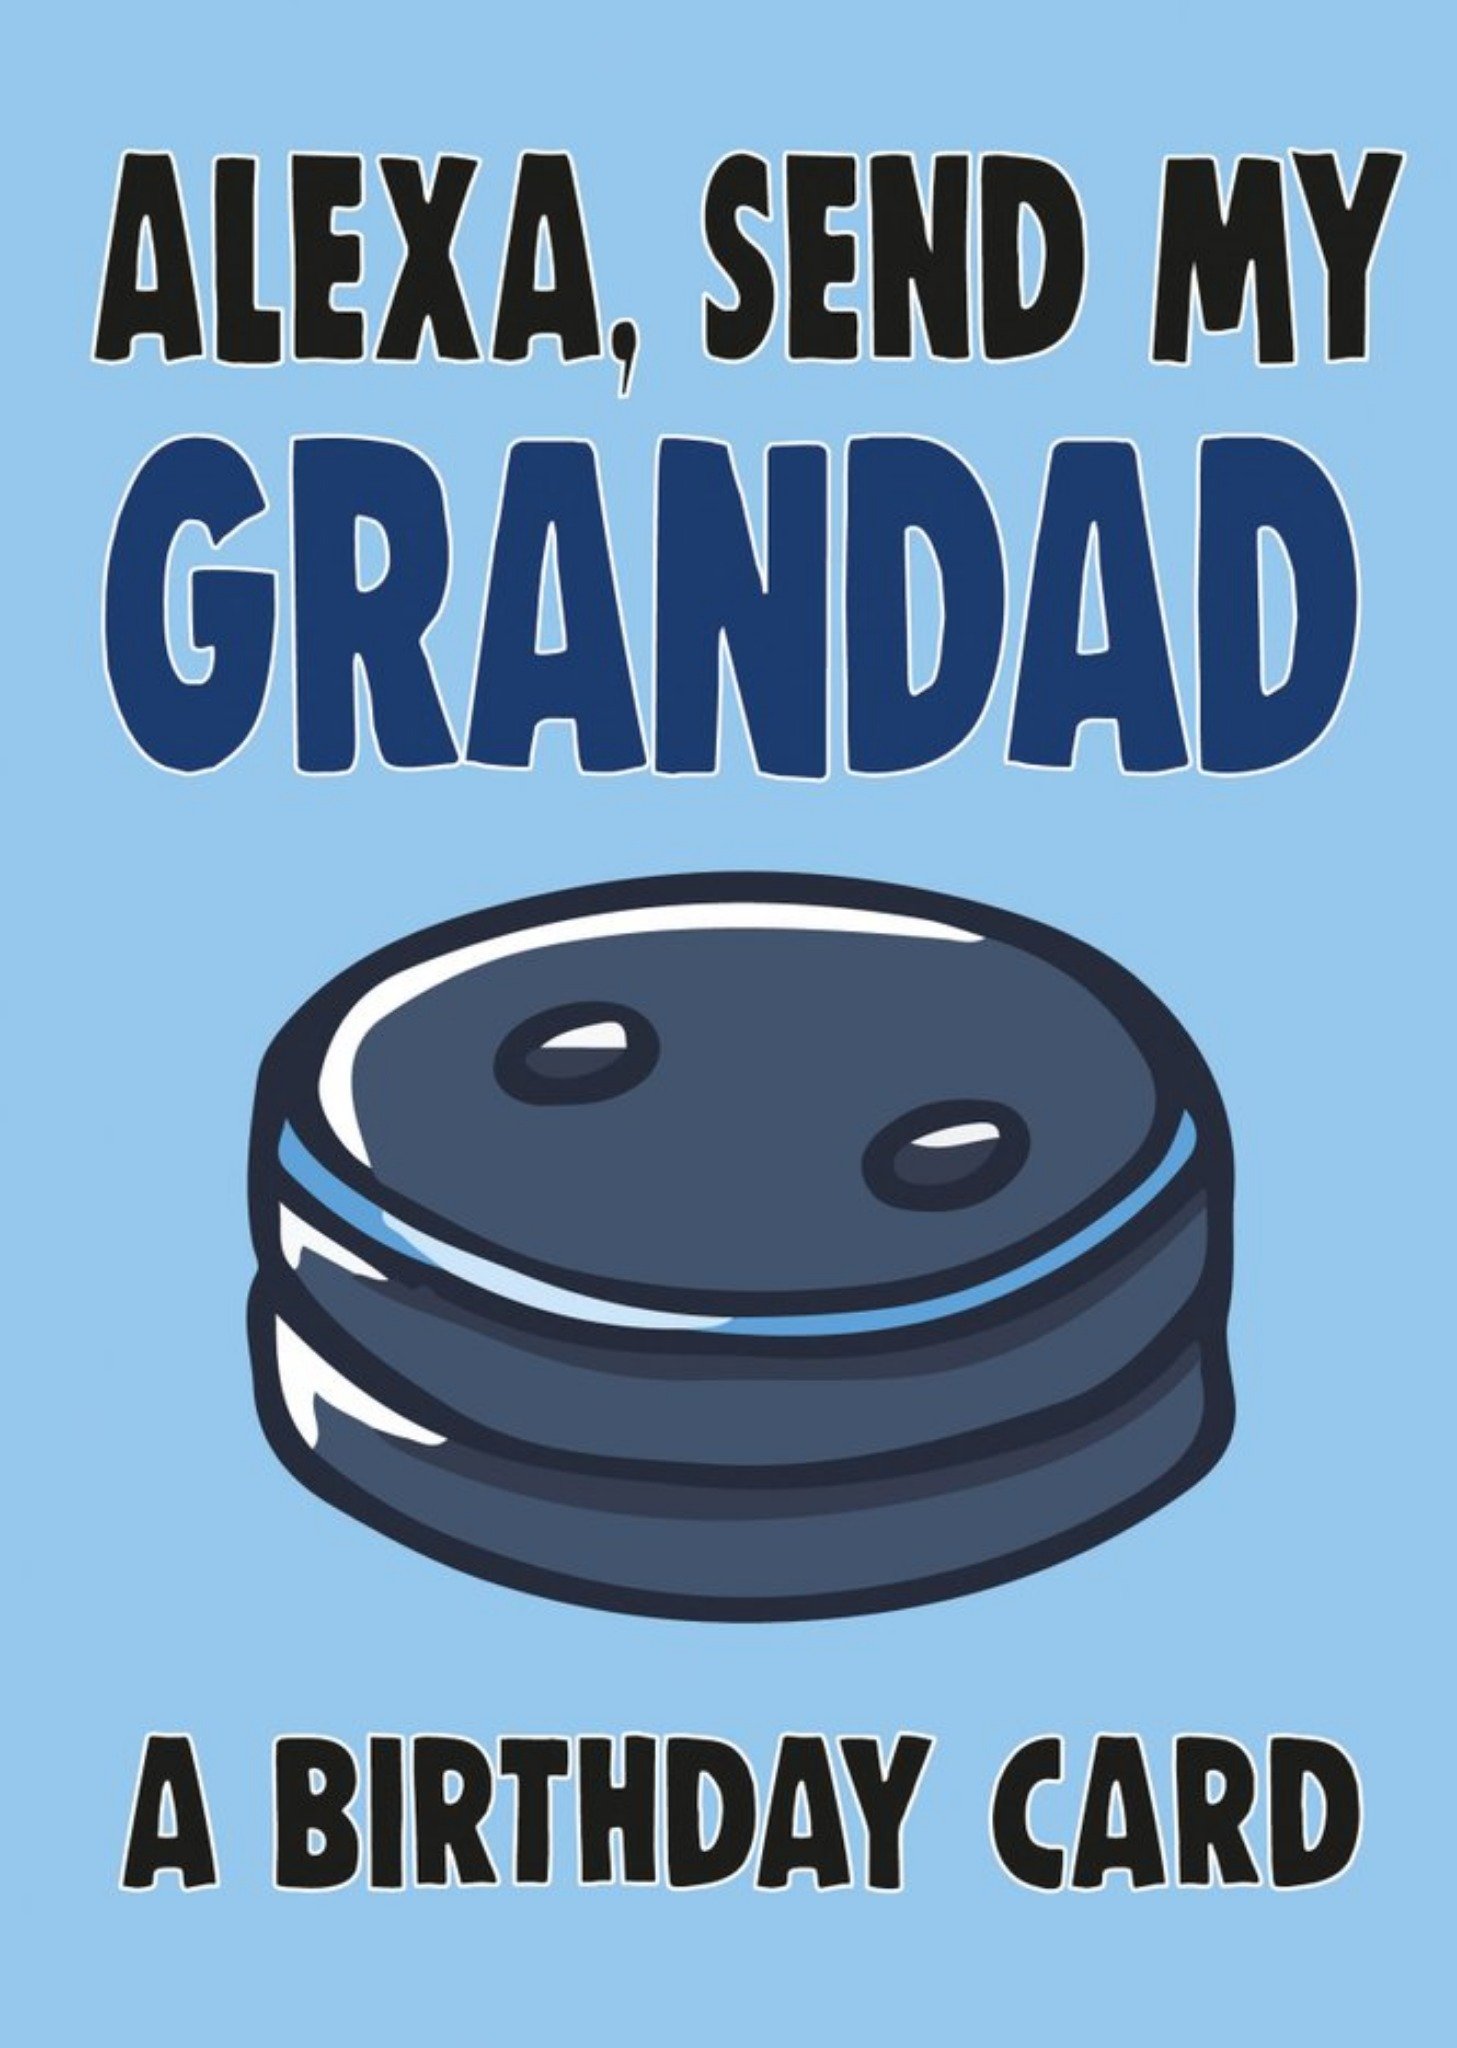 Moonpig Bright Bold Typography With An Illustration Of Alexa Grandad Birthday Card, Large